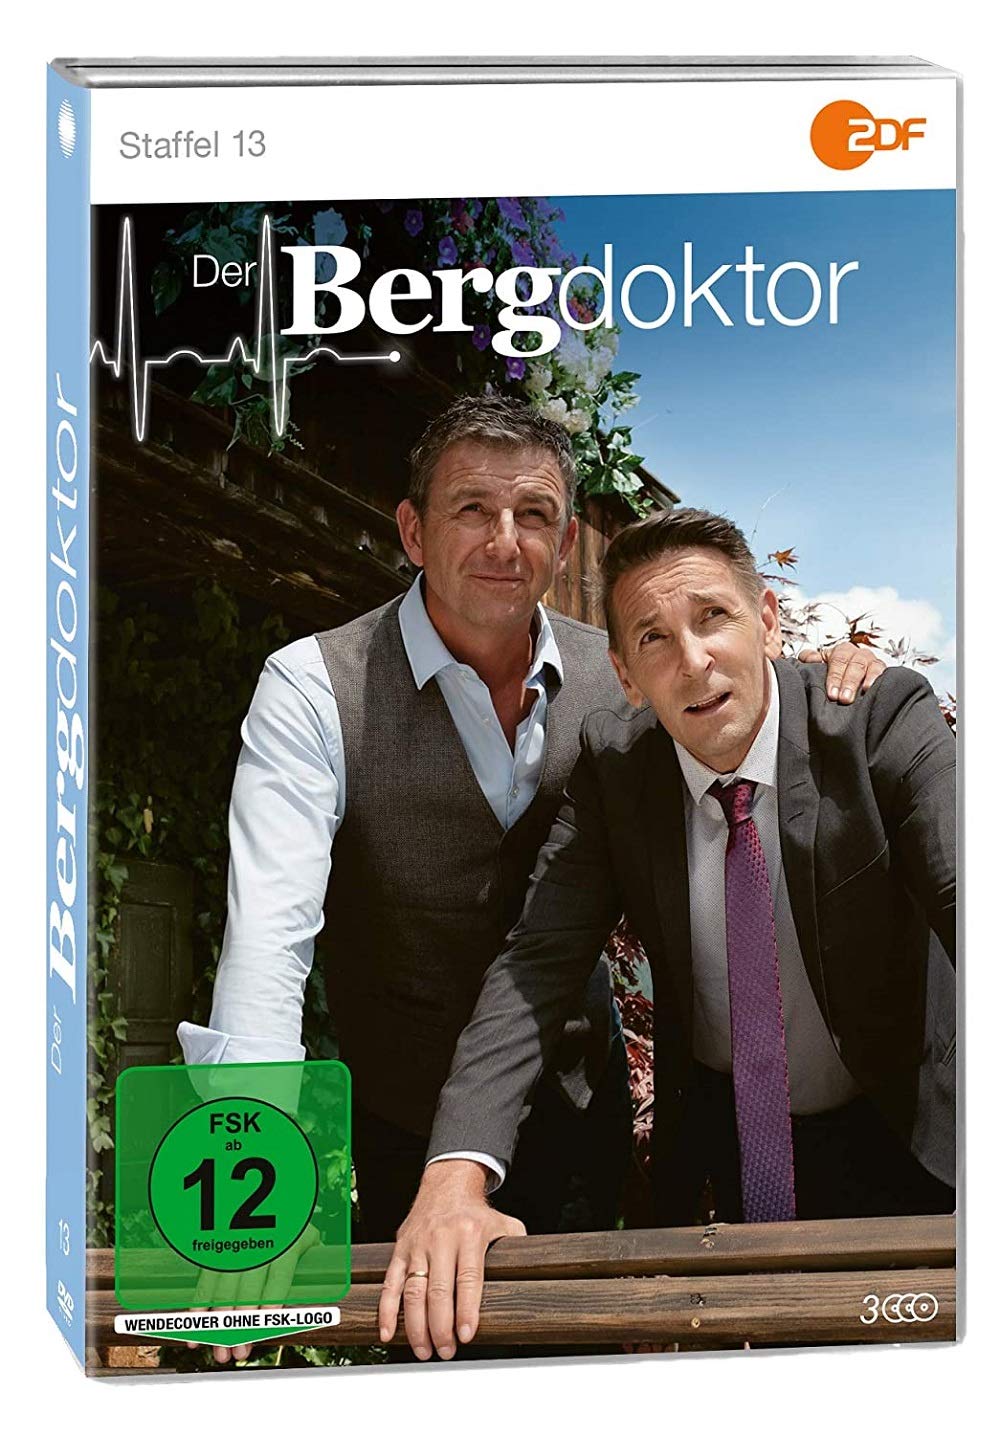 Der Bergdoktor Staffel 1-14 (1-10 Box und Staffel 11+12+13+14) Folgen 1-128